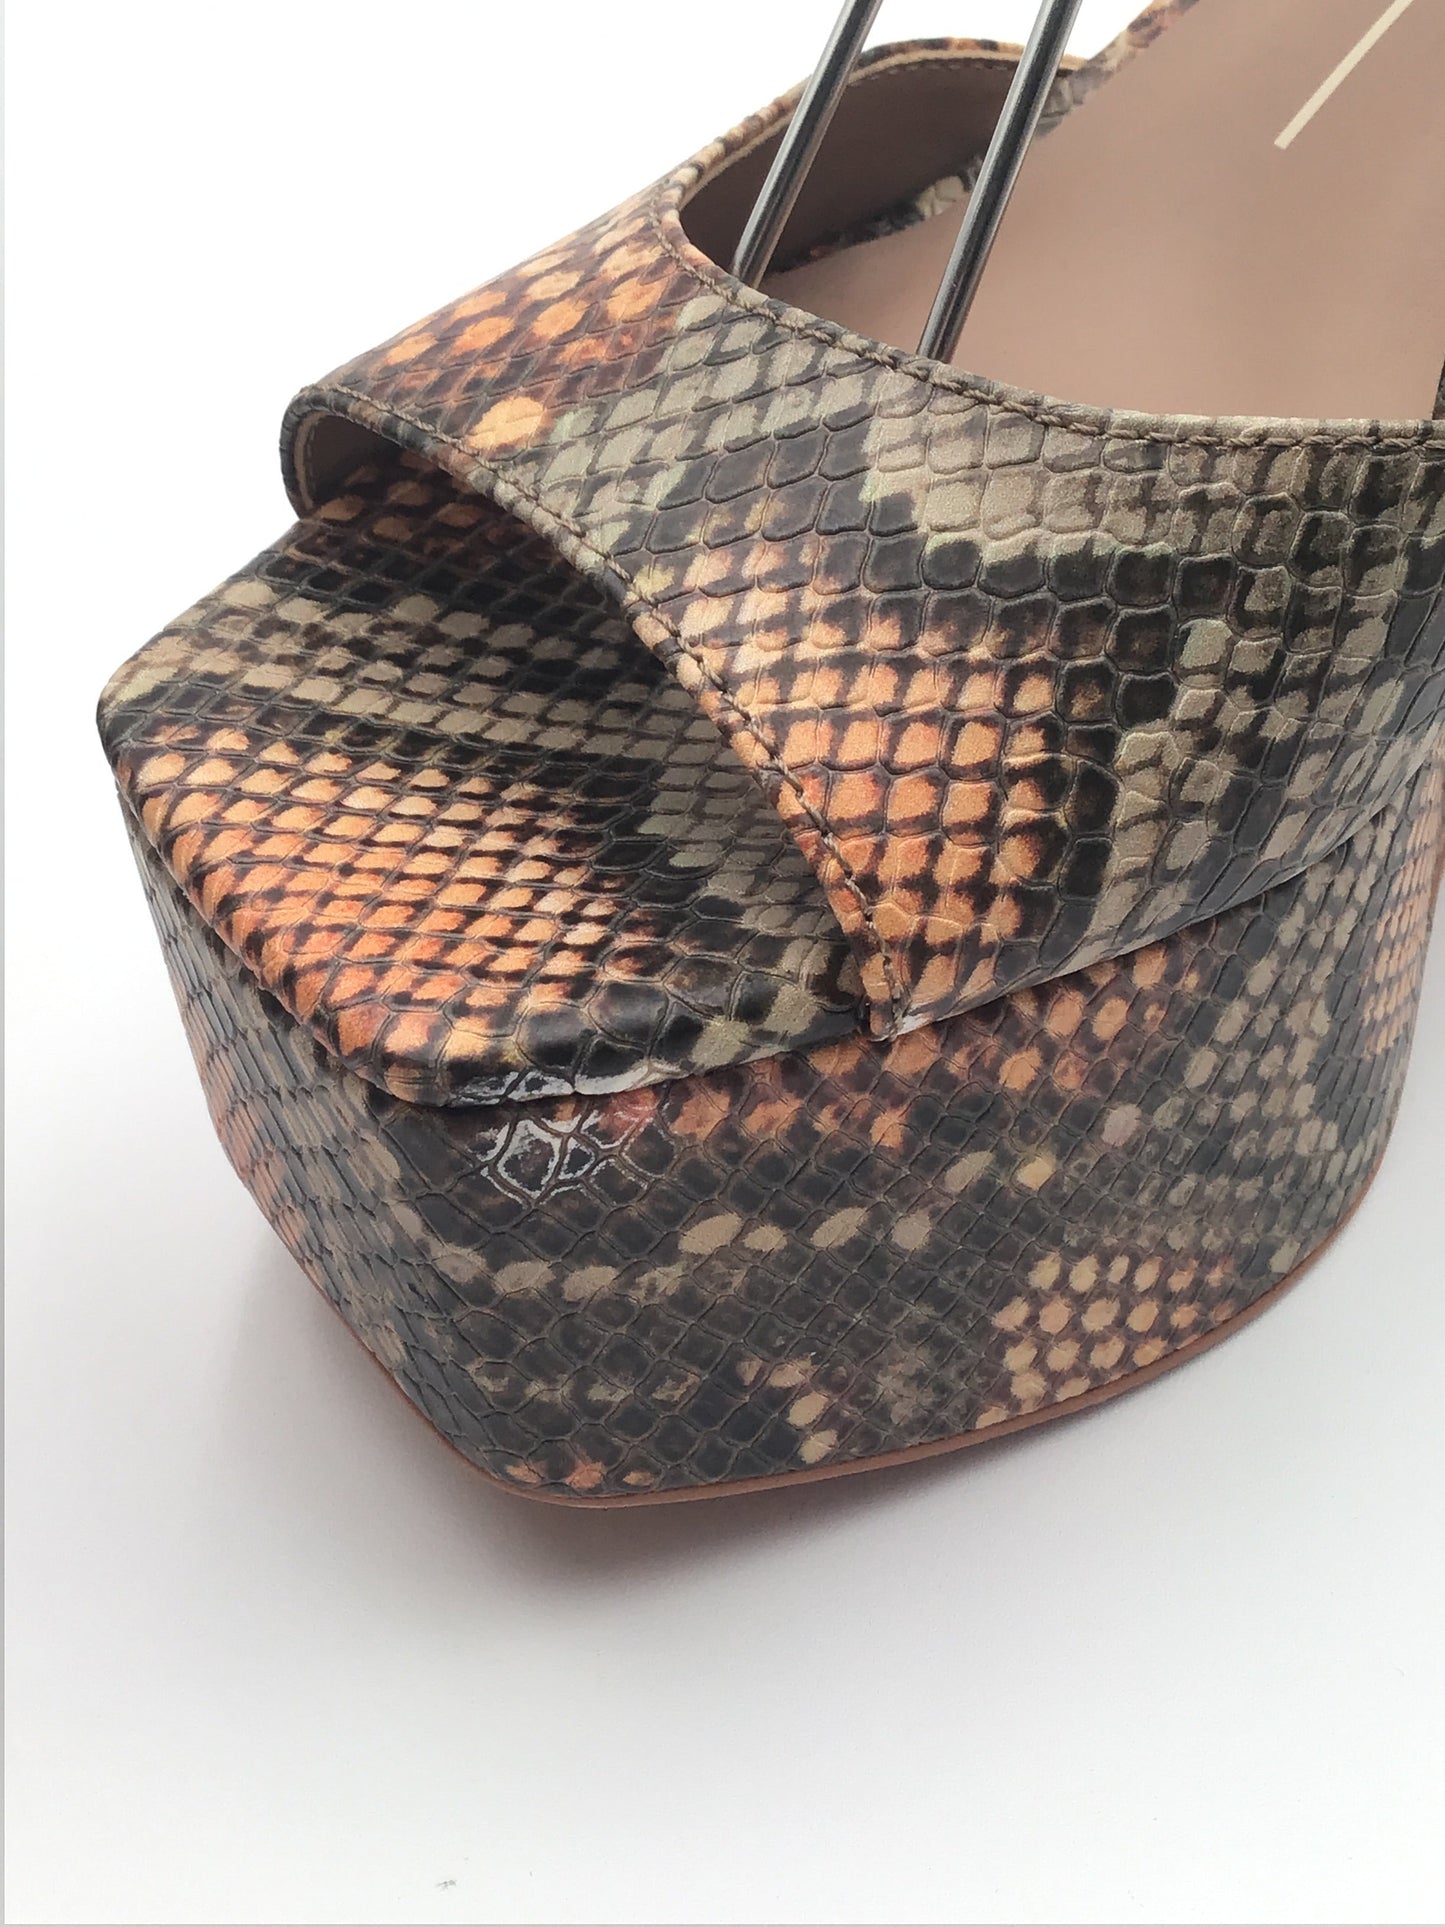 Snakeskin Print Sandals Heels Wedge Dolce Vita, Size 7